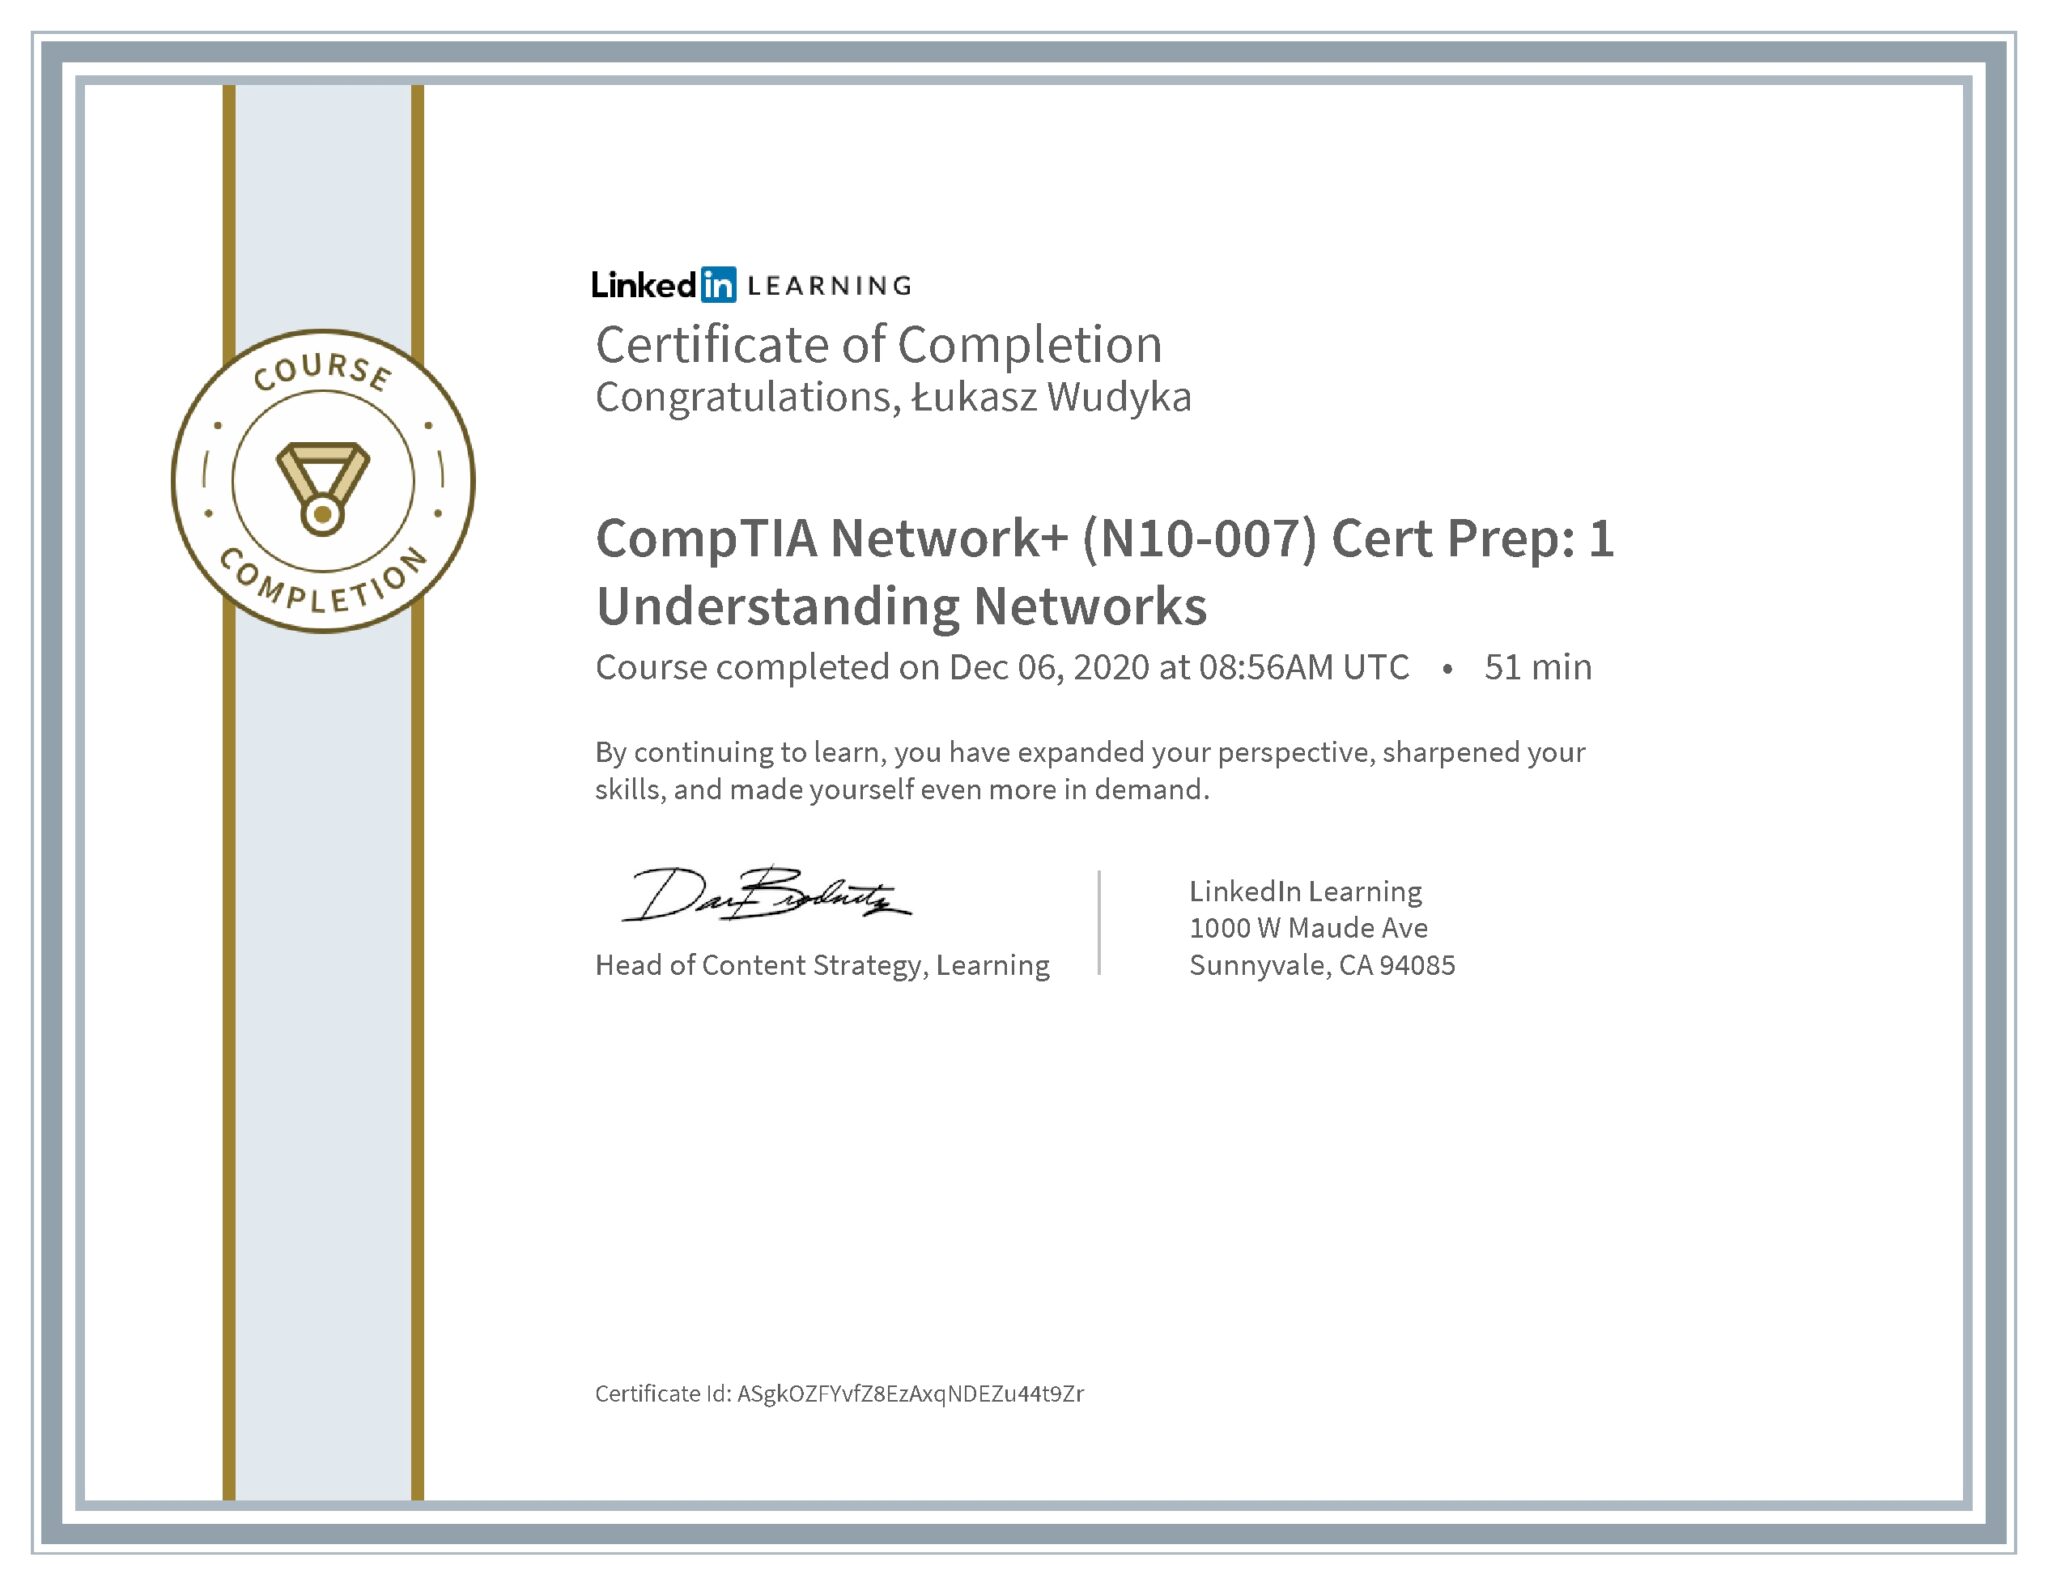 Łukasz Wudyka certyfikat LinkedIn CompTIA Network+ (N10-007) Cert Prep: 1 Understanding Networks